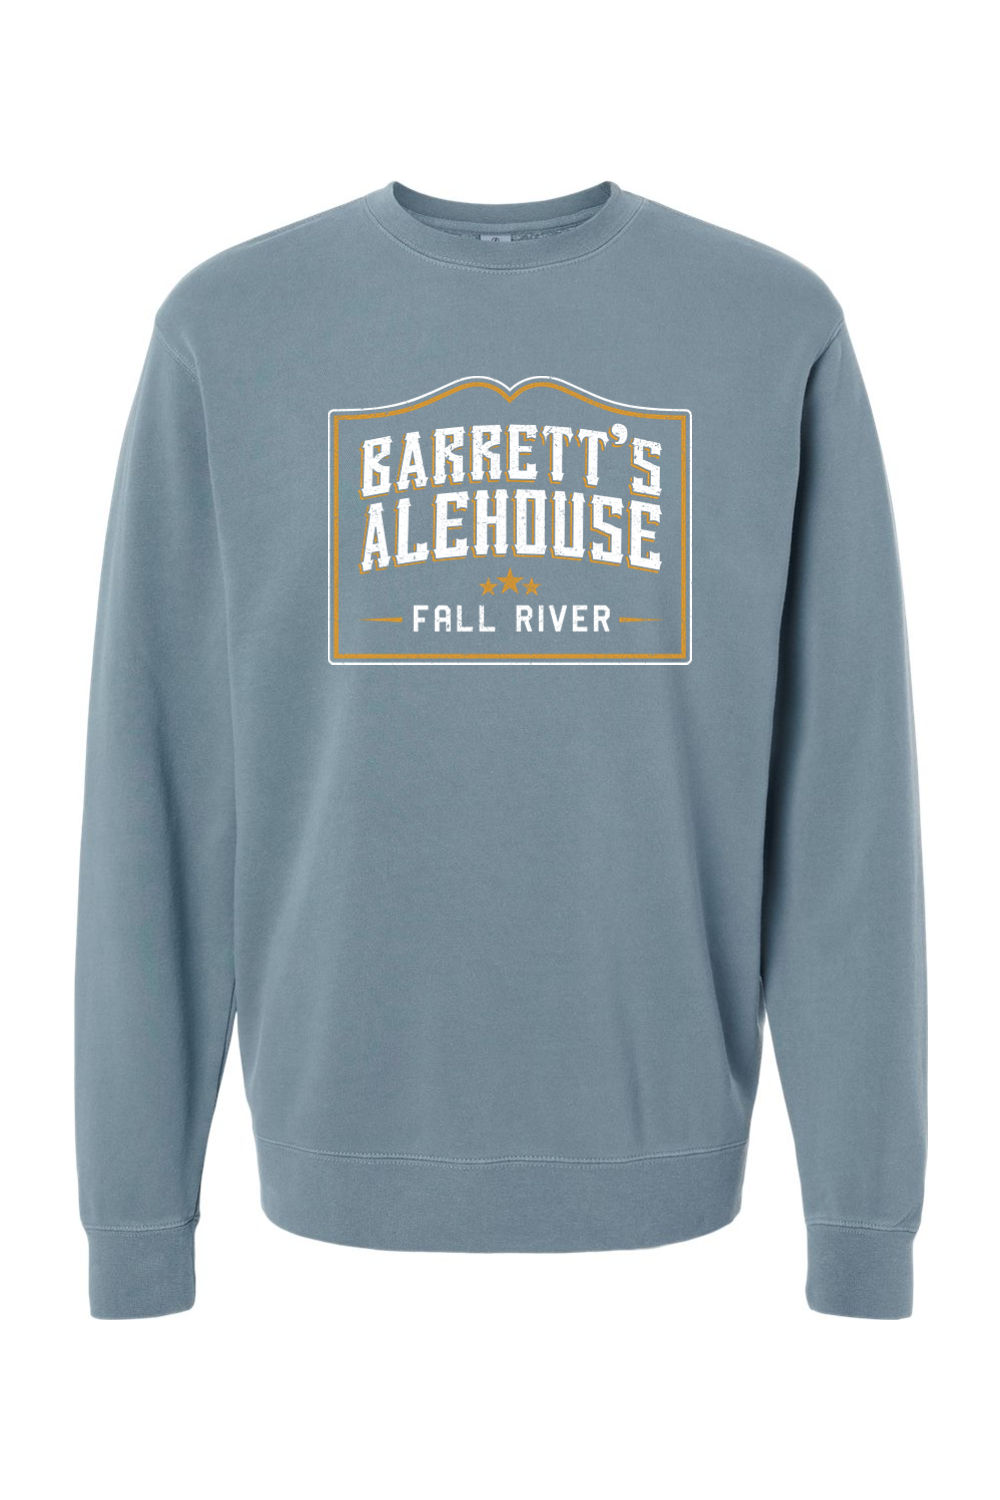 Barrett's Alehouse Pigment-Dyed Crewneck Sweatshirt